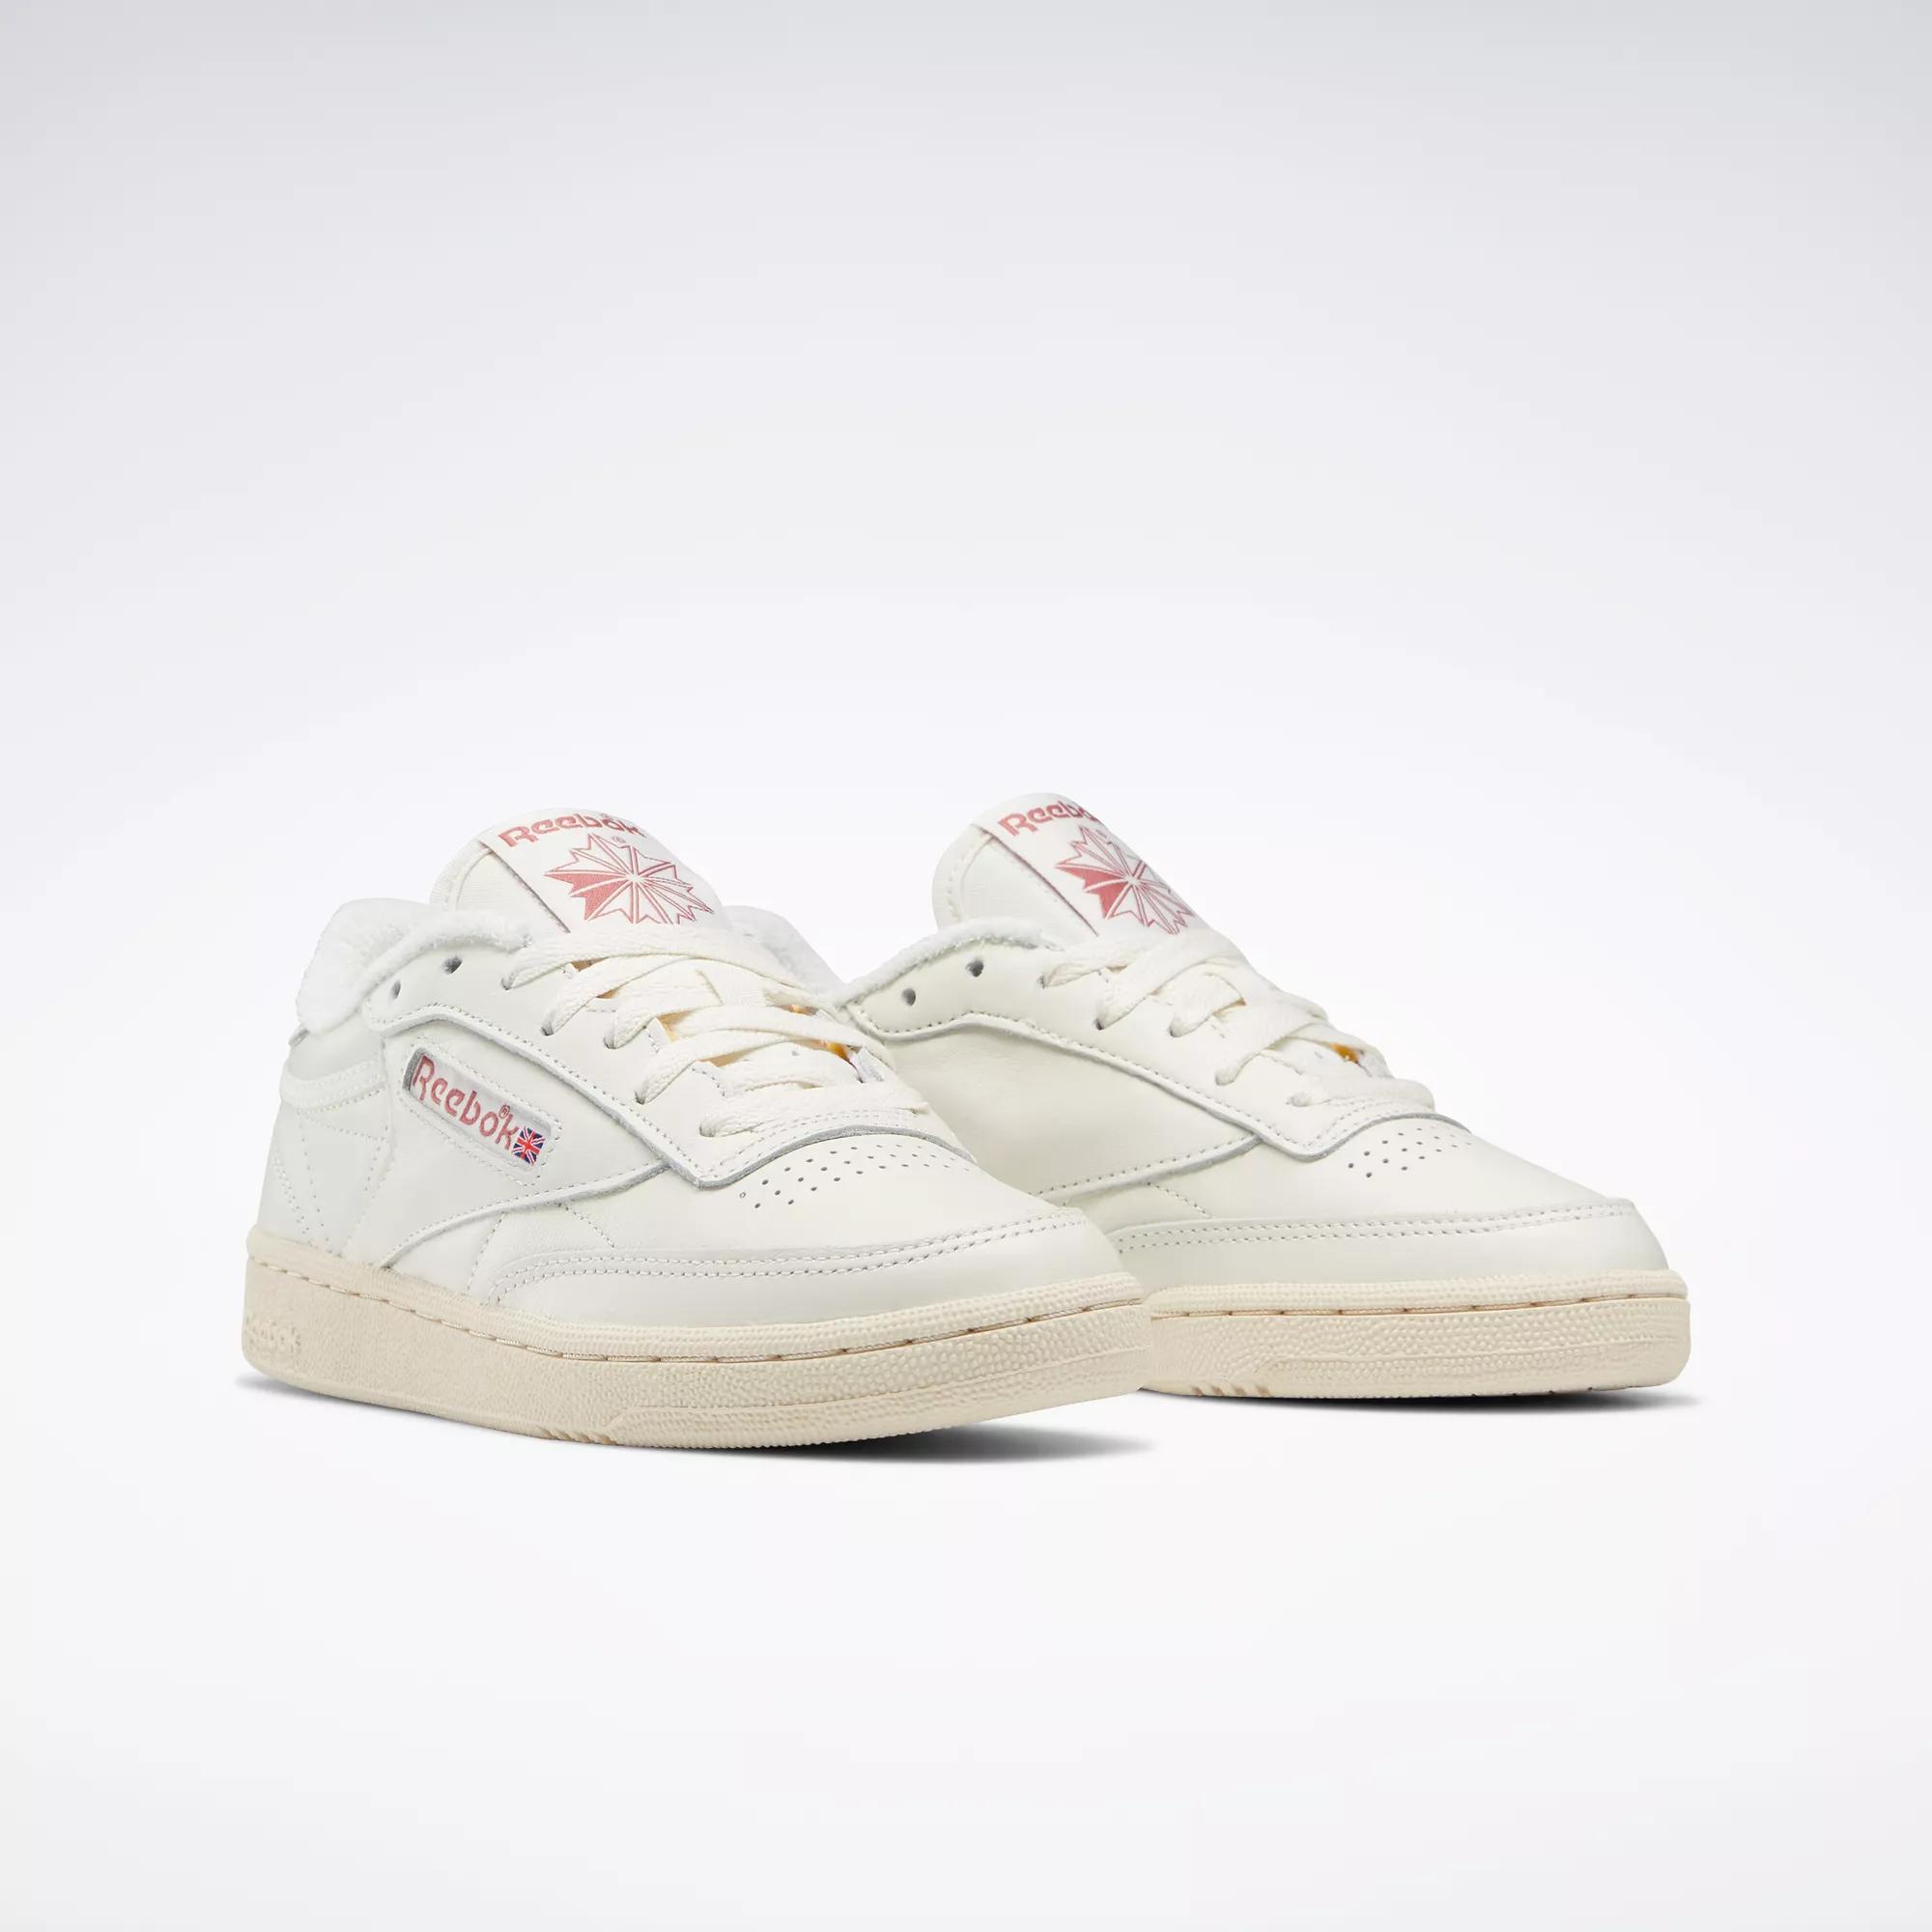 Club C 85 Vintage Women's Shoes - Chalk / Paperwhite / Rose Dust | Reebok